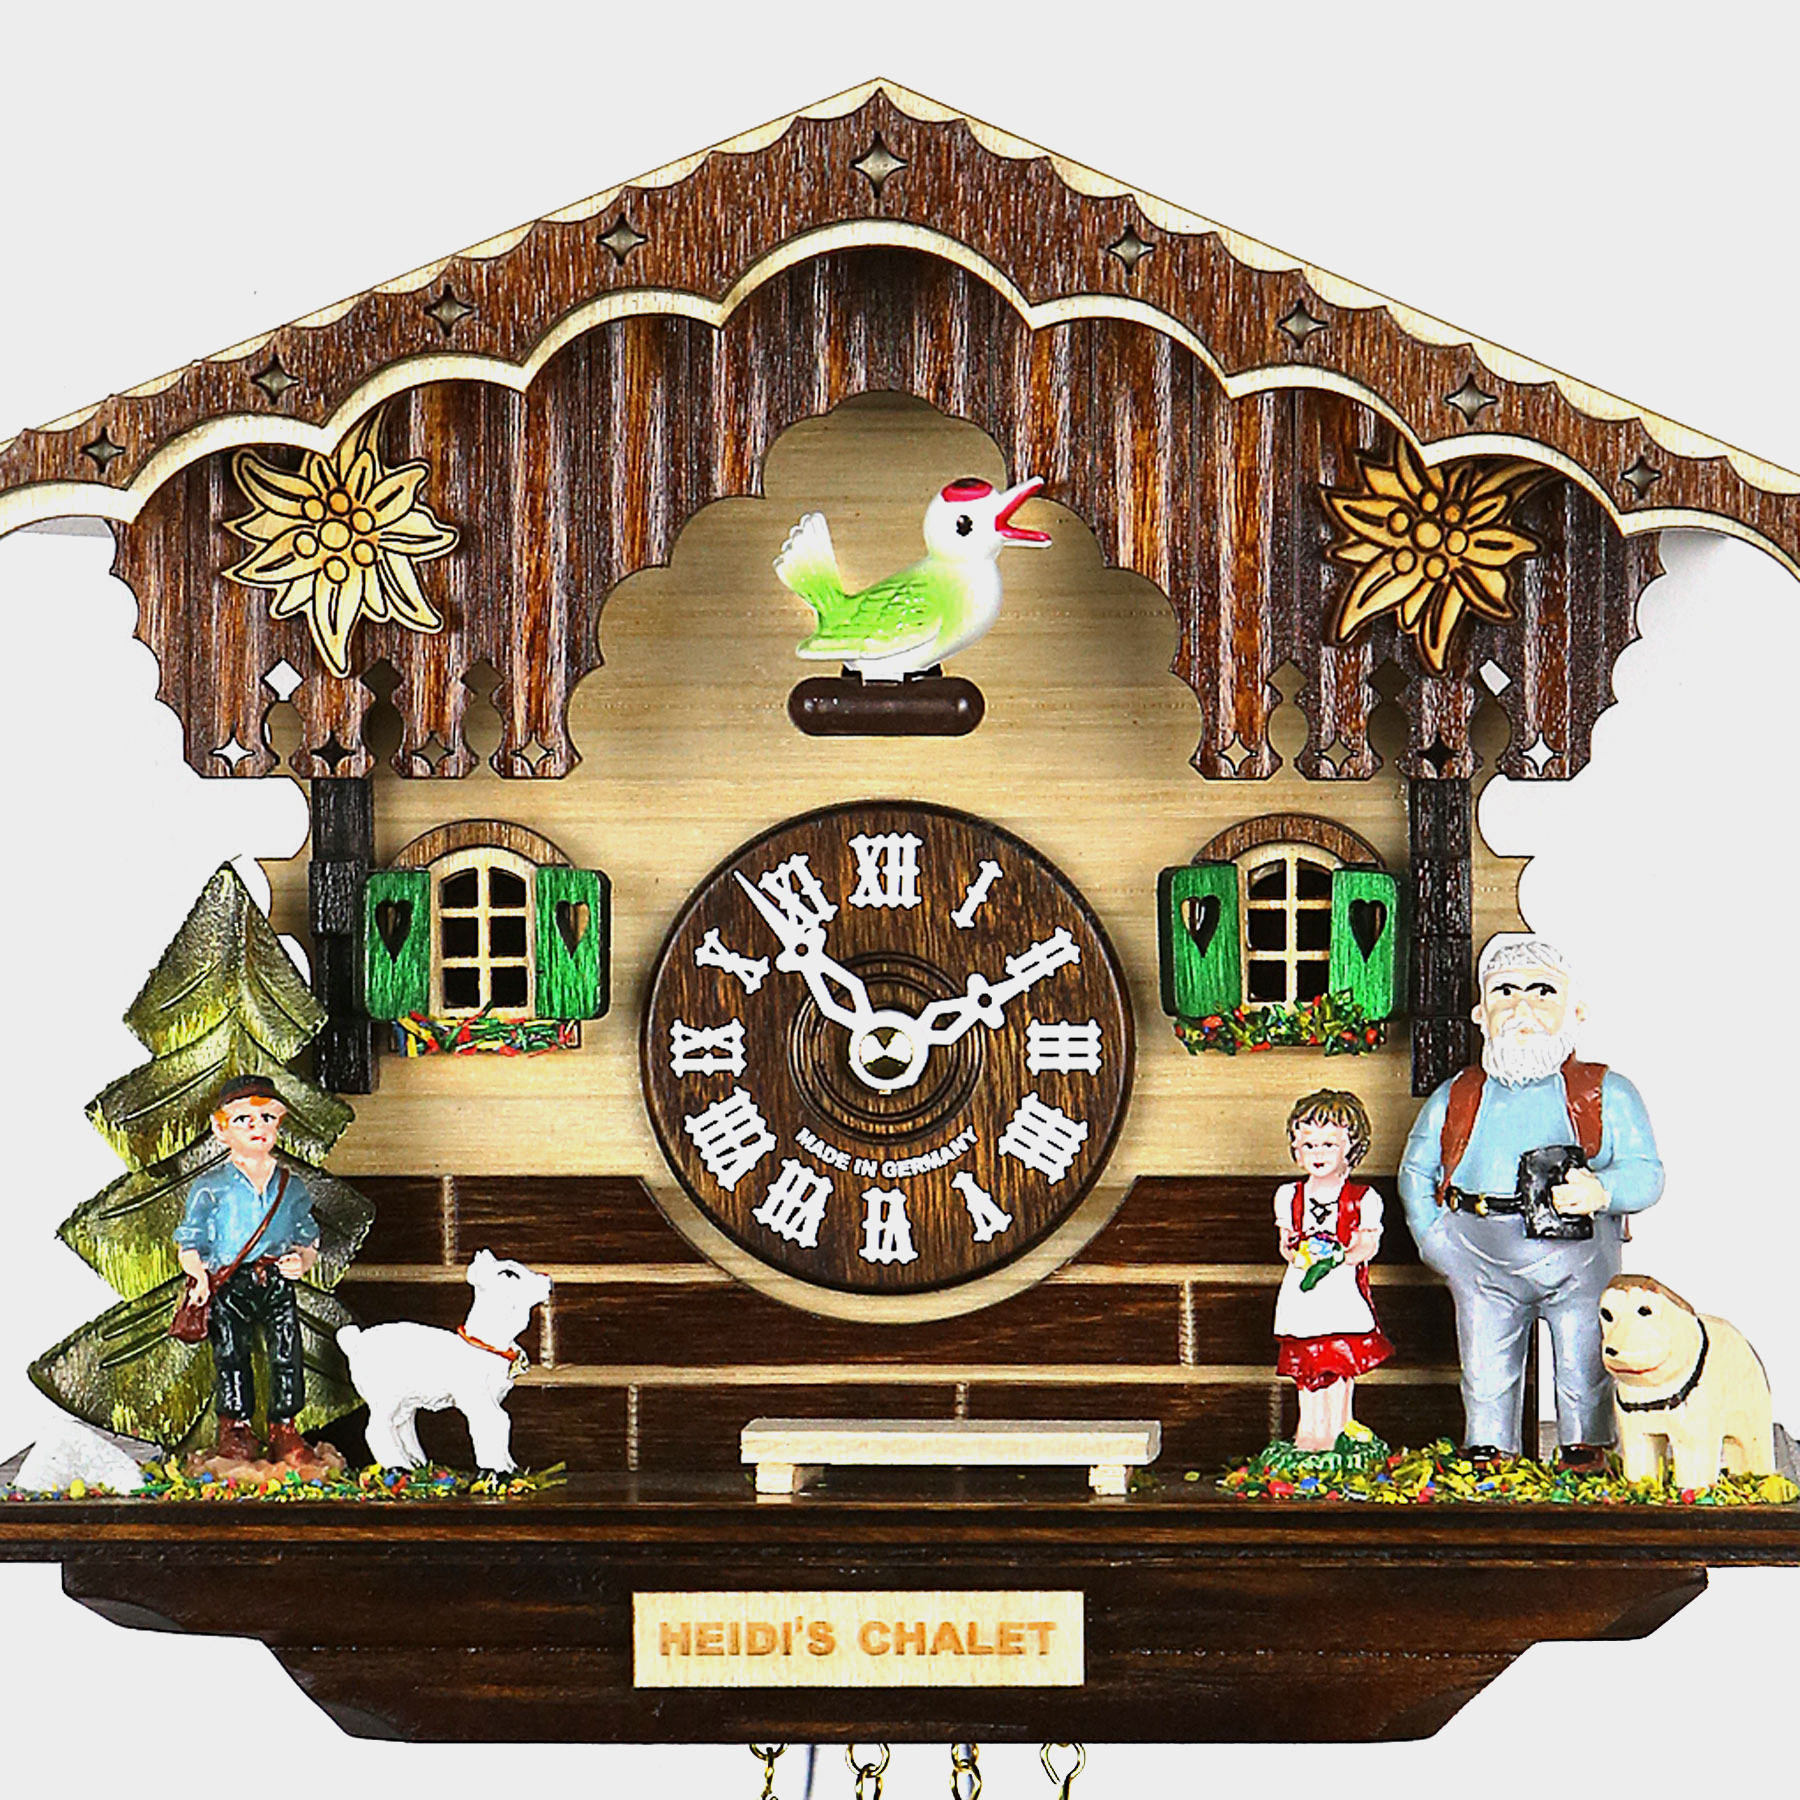 Mini reloj pendel, reloj cuco, mini relojes cuco de la Selva Negra, chalet  - Kuckucksuhren Shop - Original Kuckucksuhren aus dem Schwarzwald